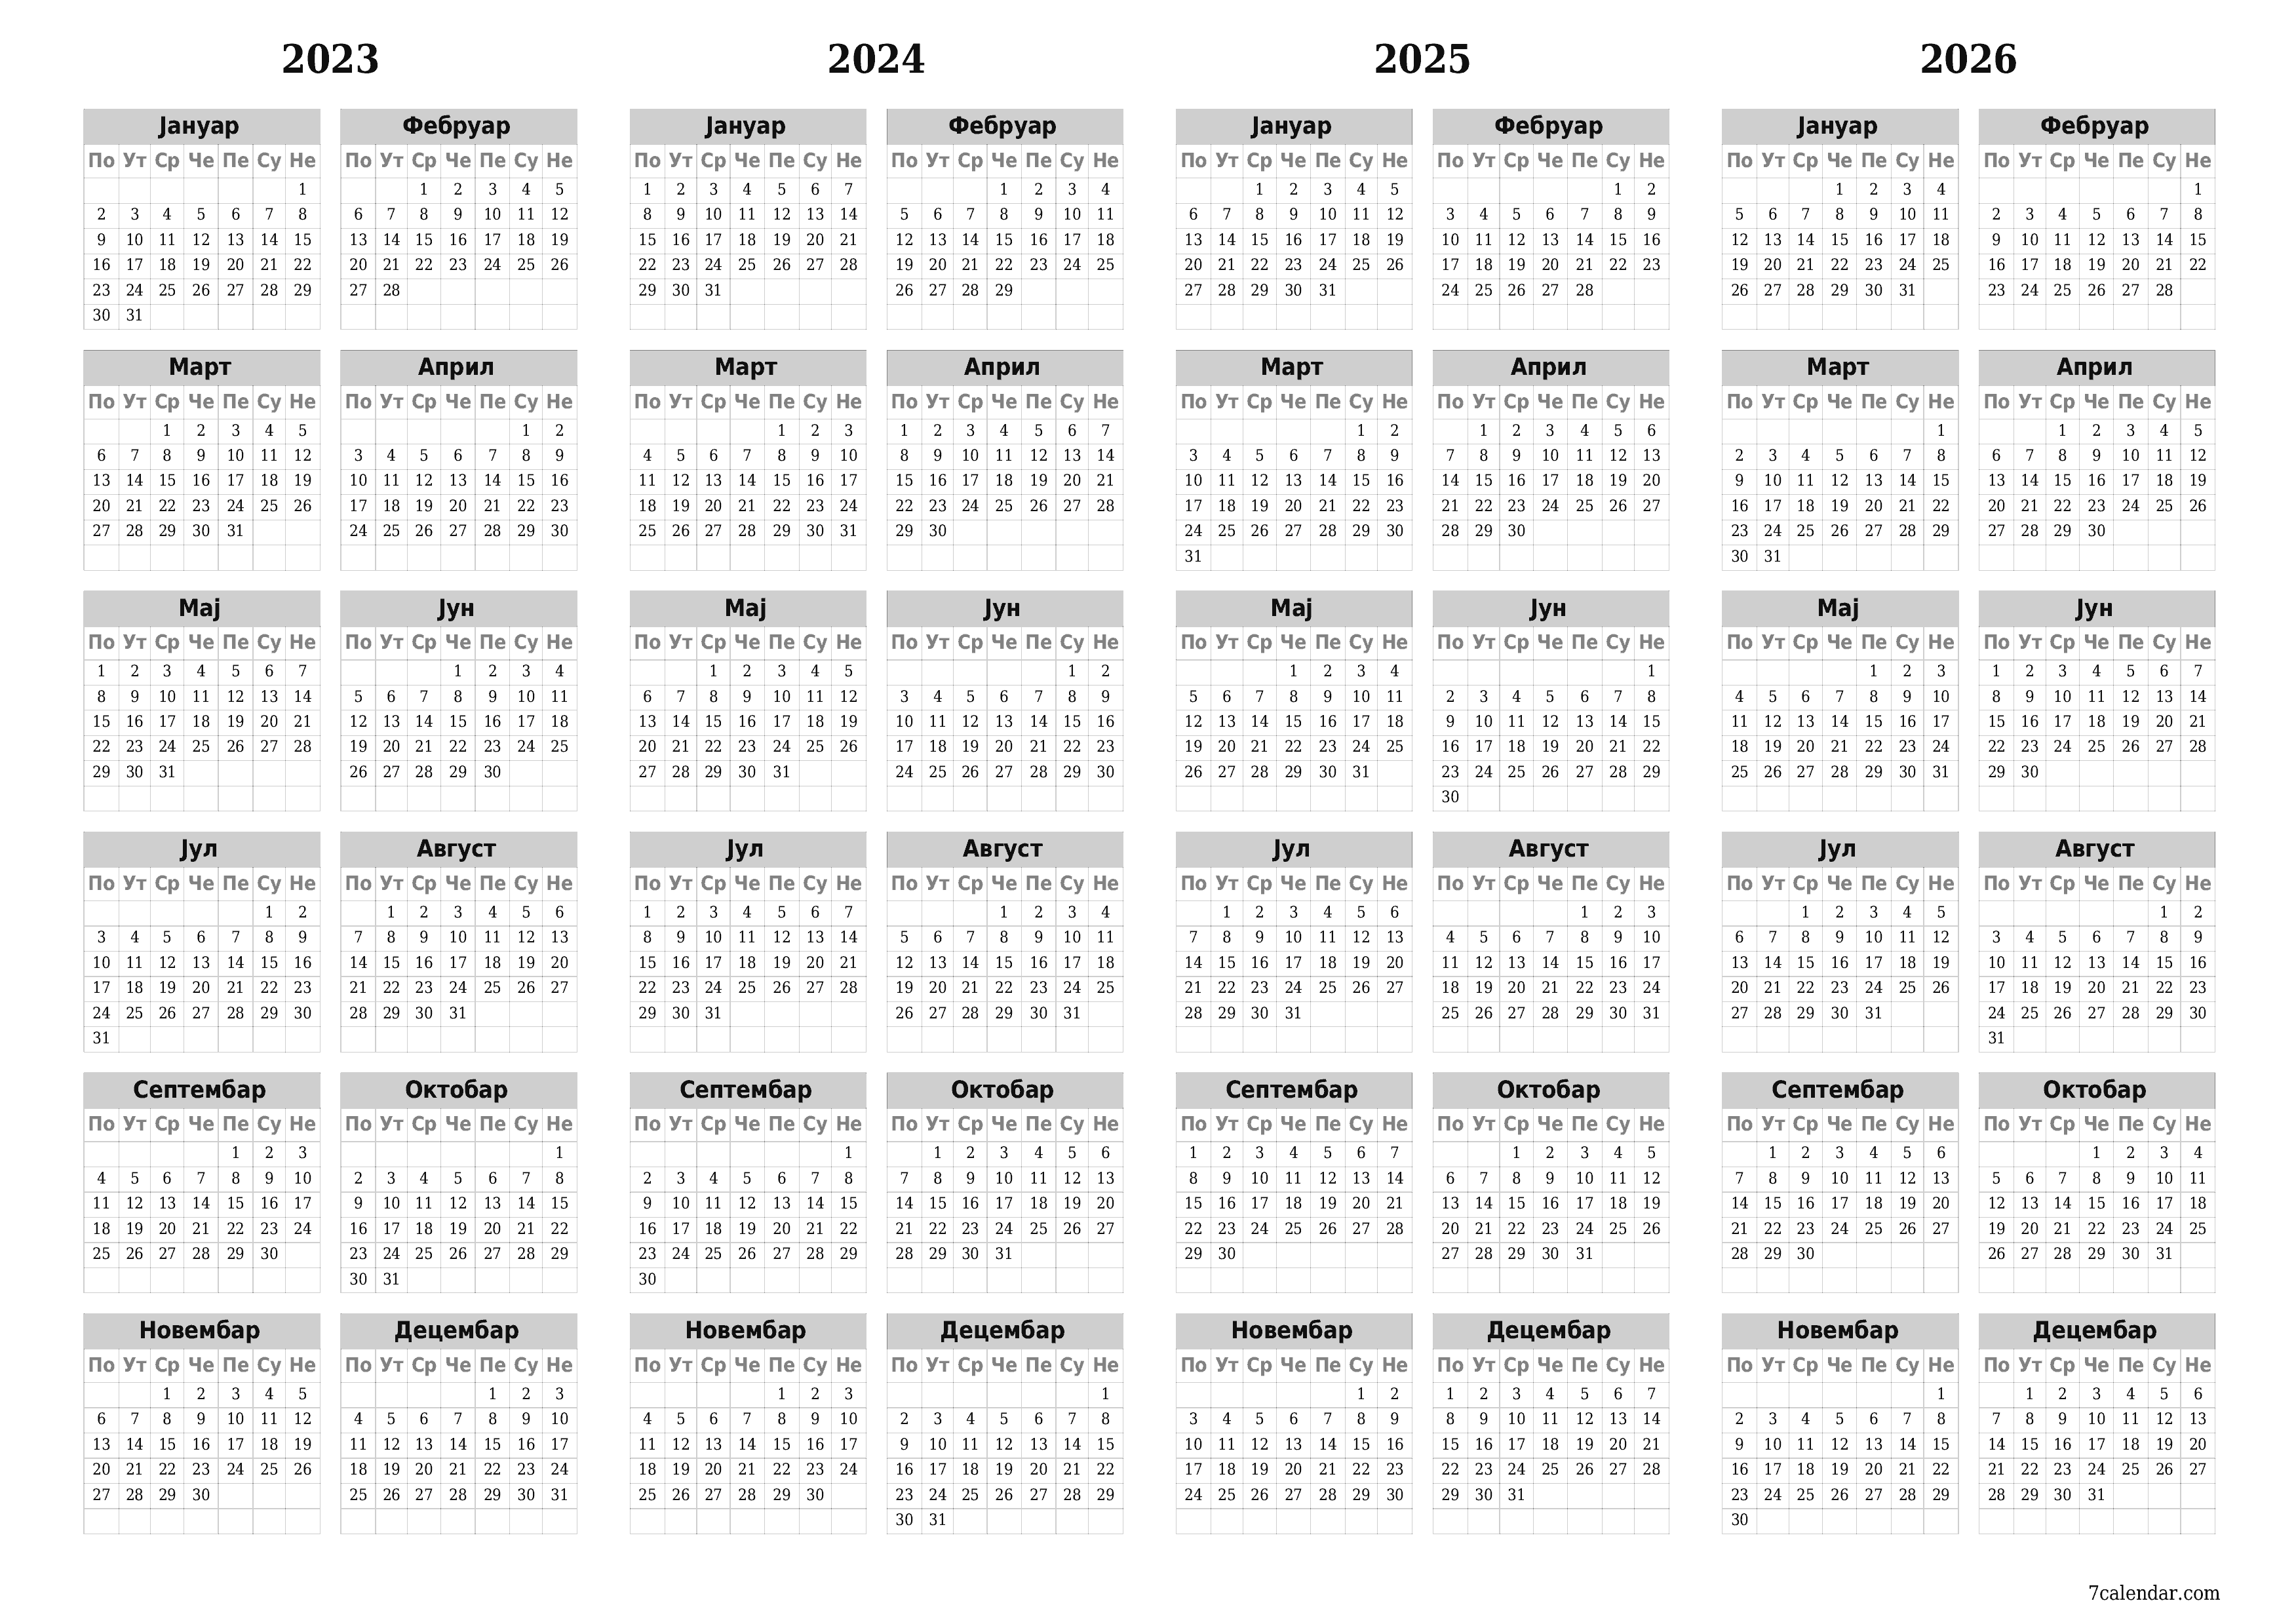  за штампање зидни шаблон а бесплатни хоризонталниј Годишње календар Март (Мар) 2023